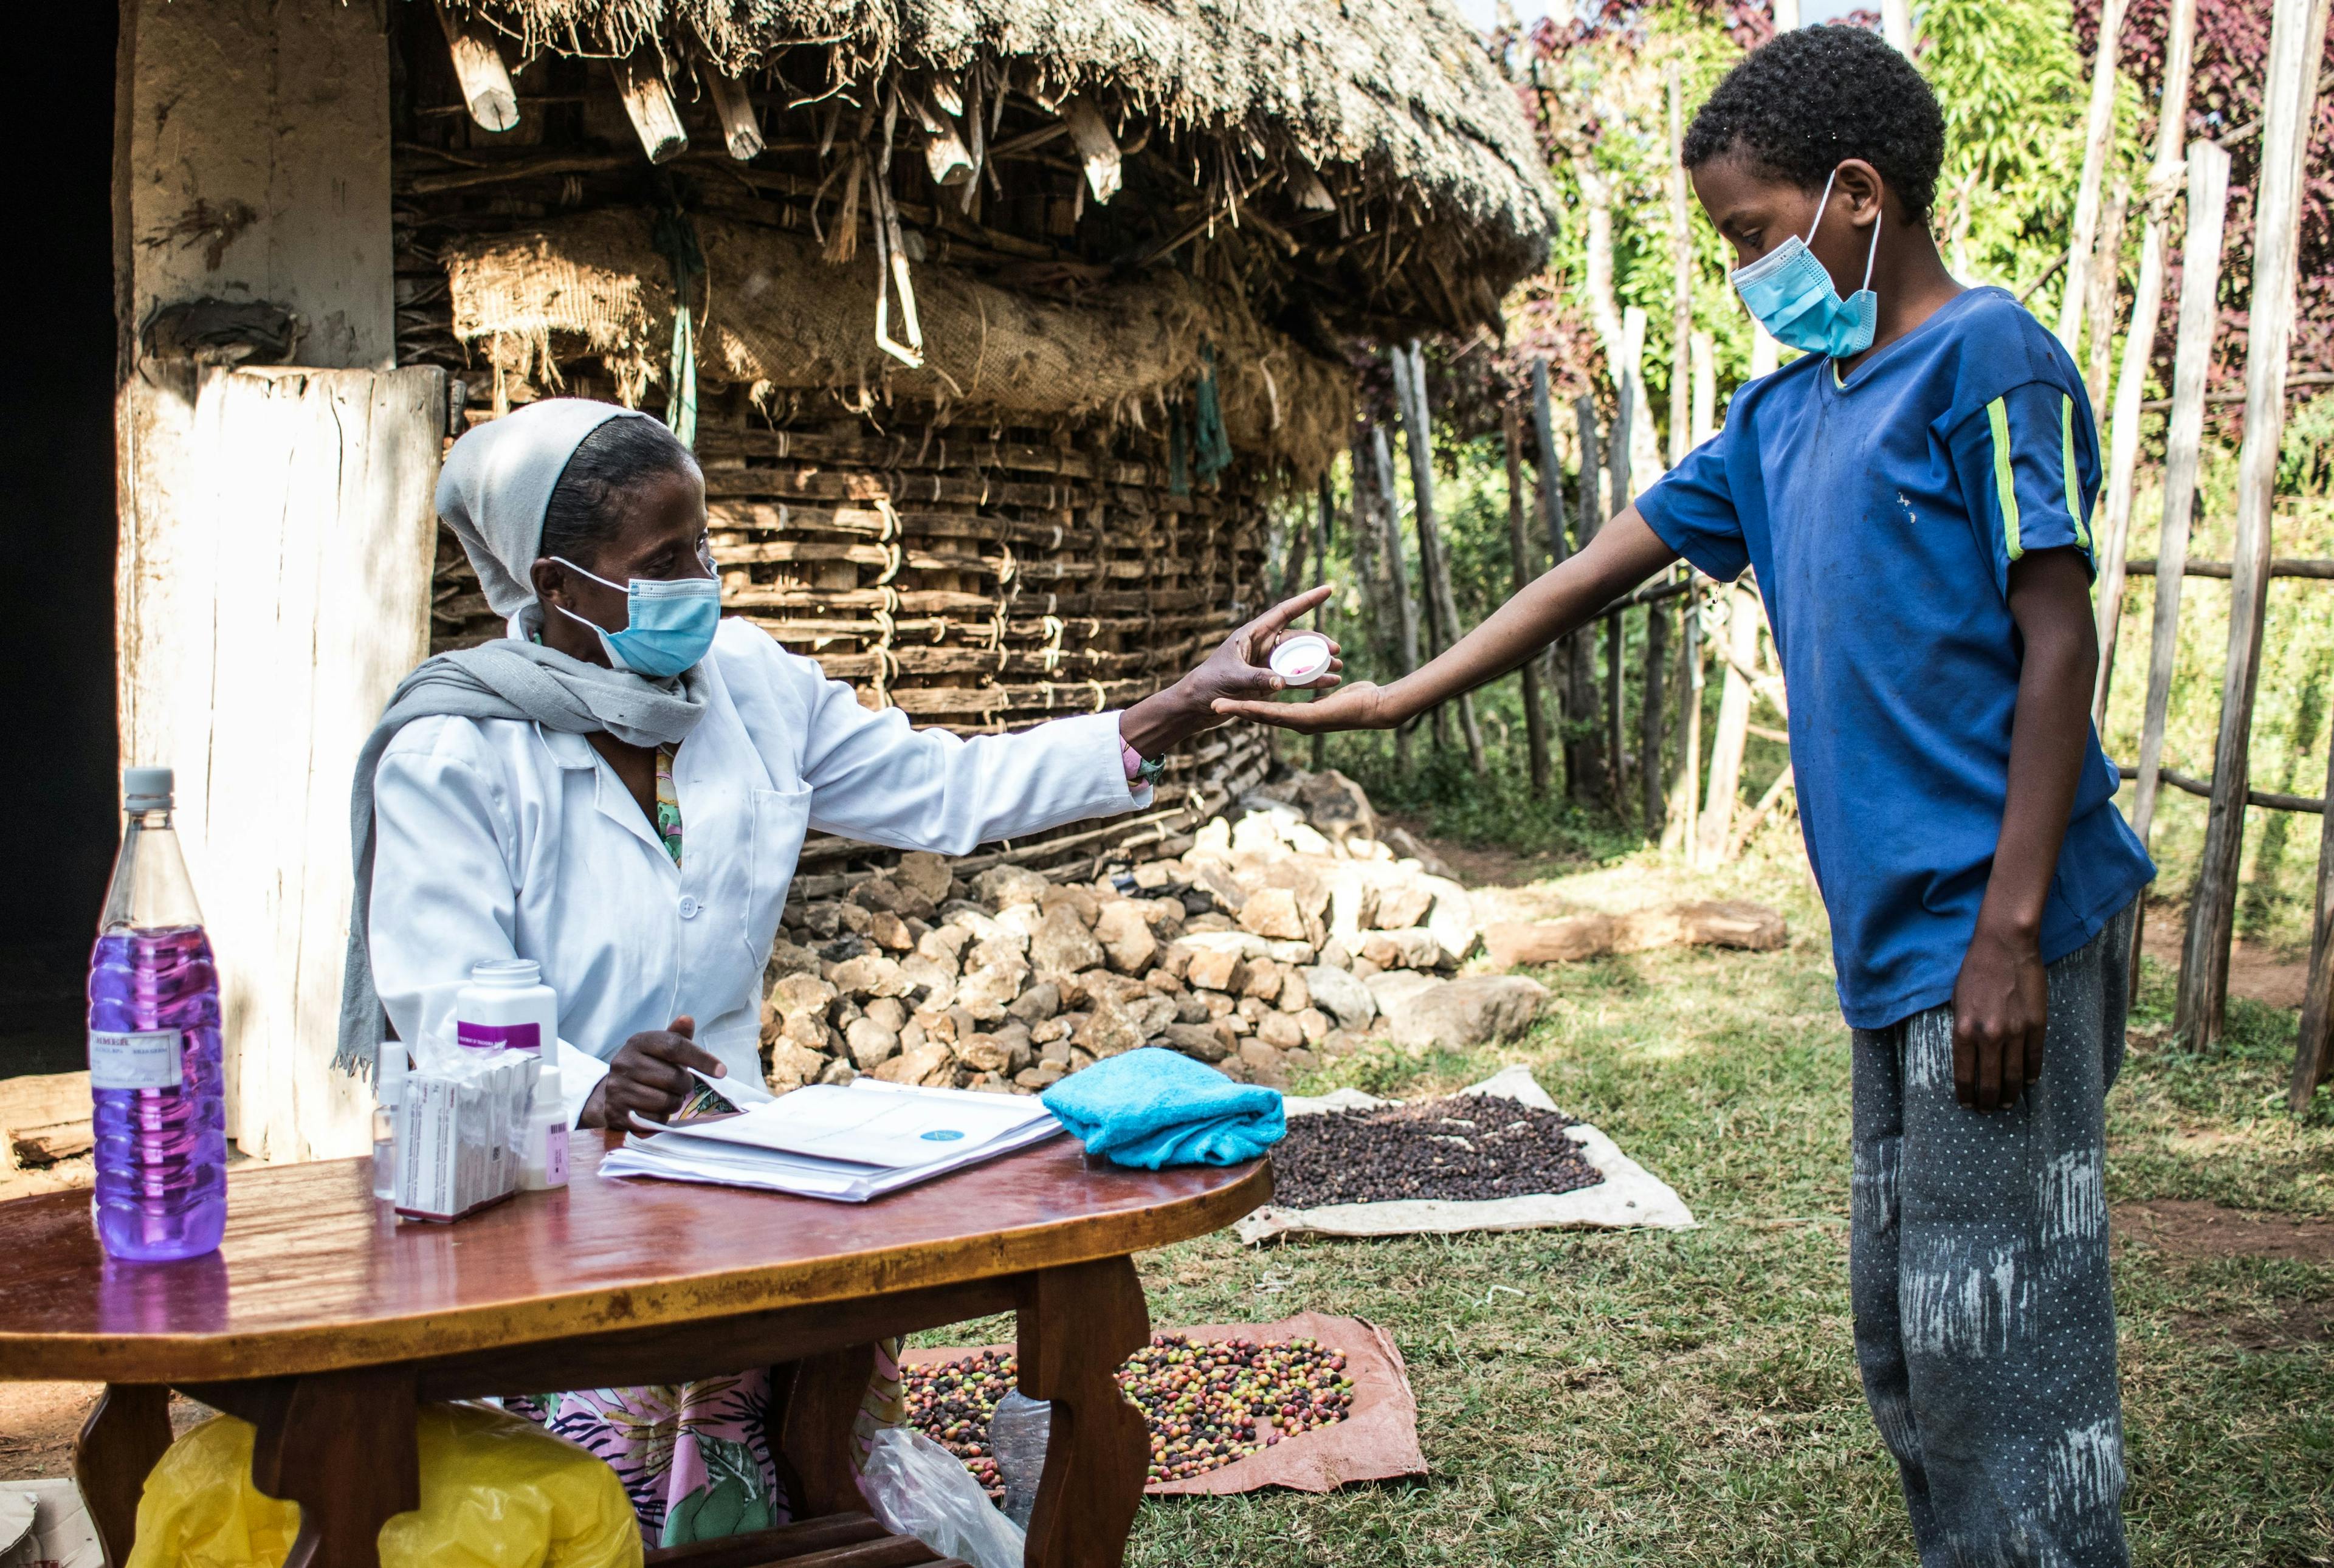 Orbis workers provide eyecare services for Ethiopian communities to treat eye diseases.